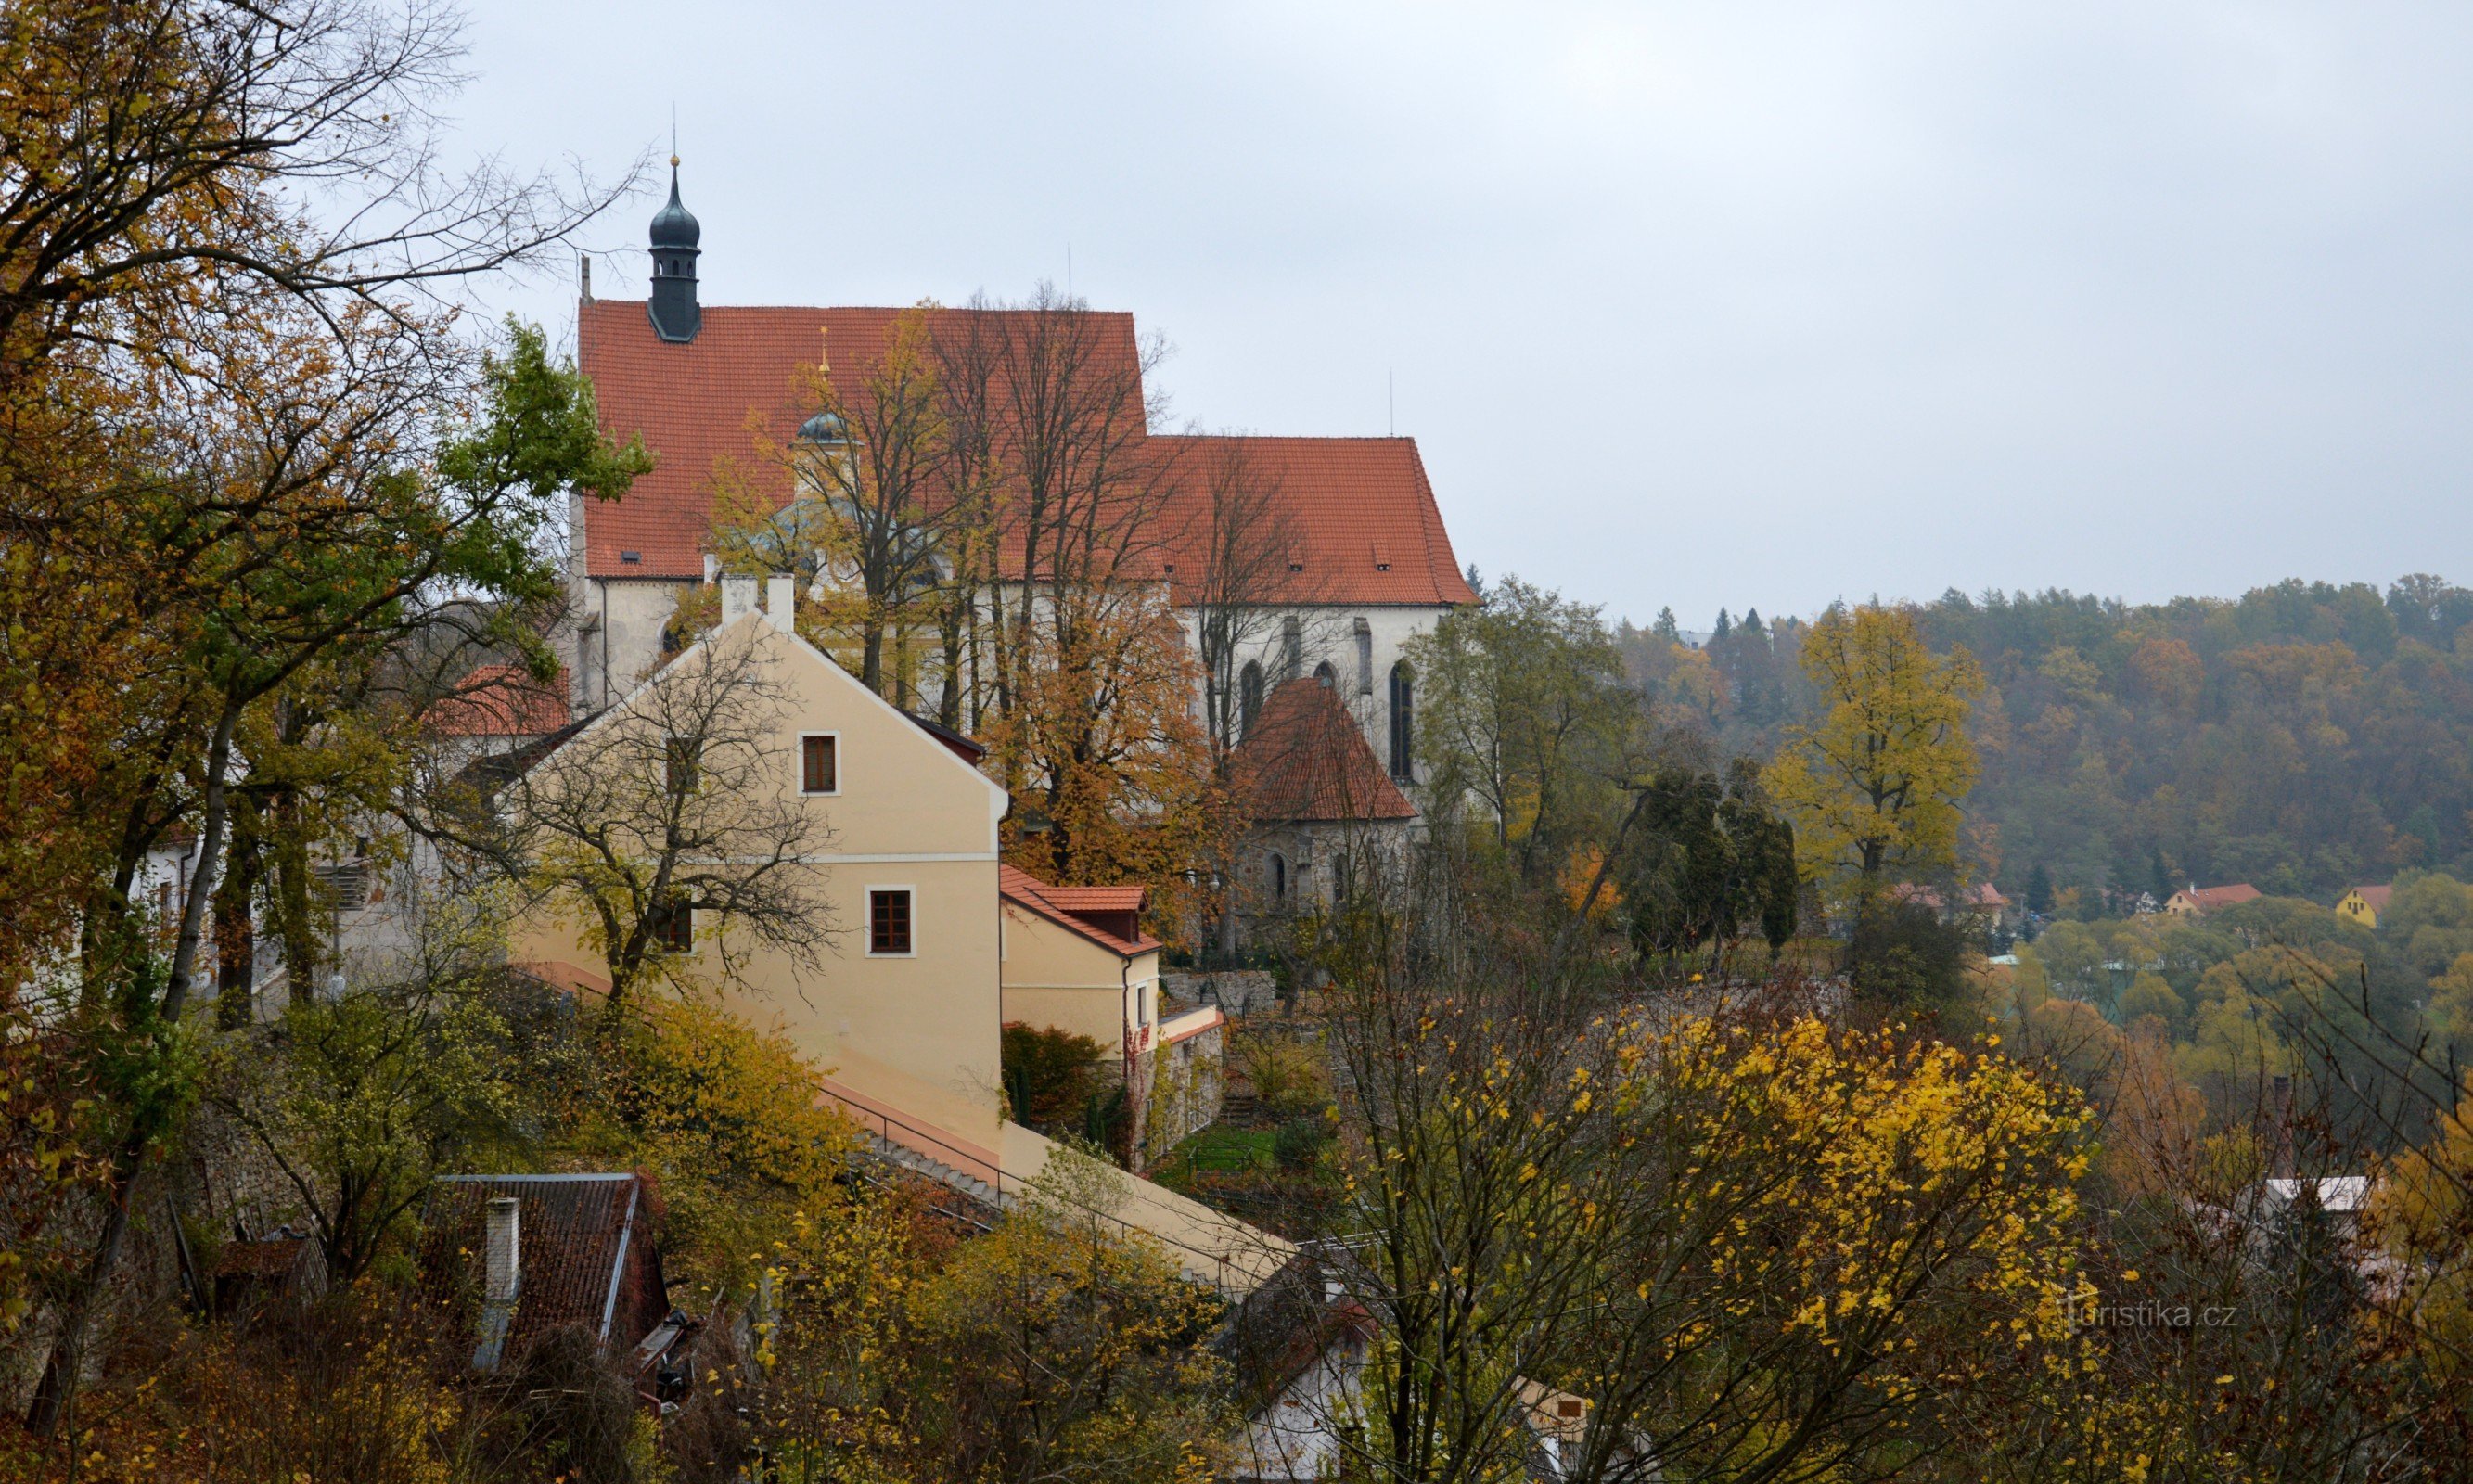 Bechyně - franjevački samostan